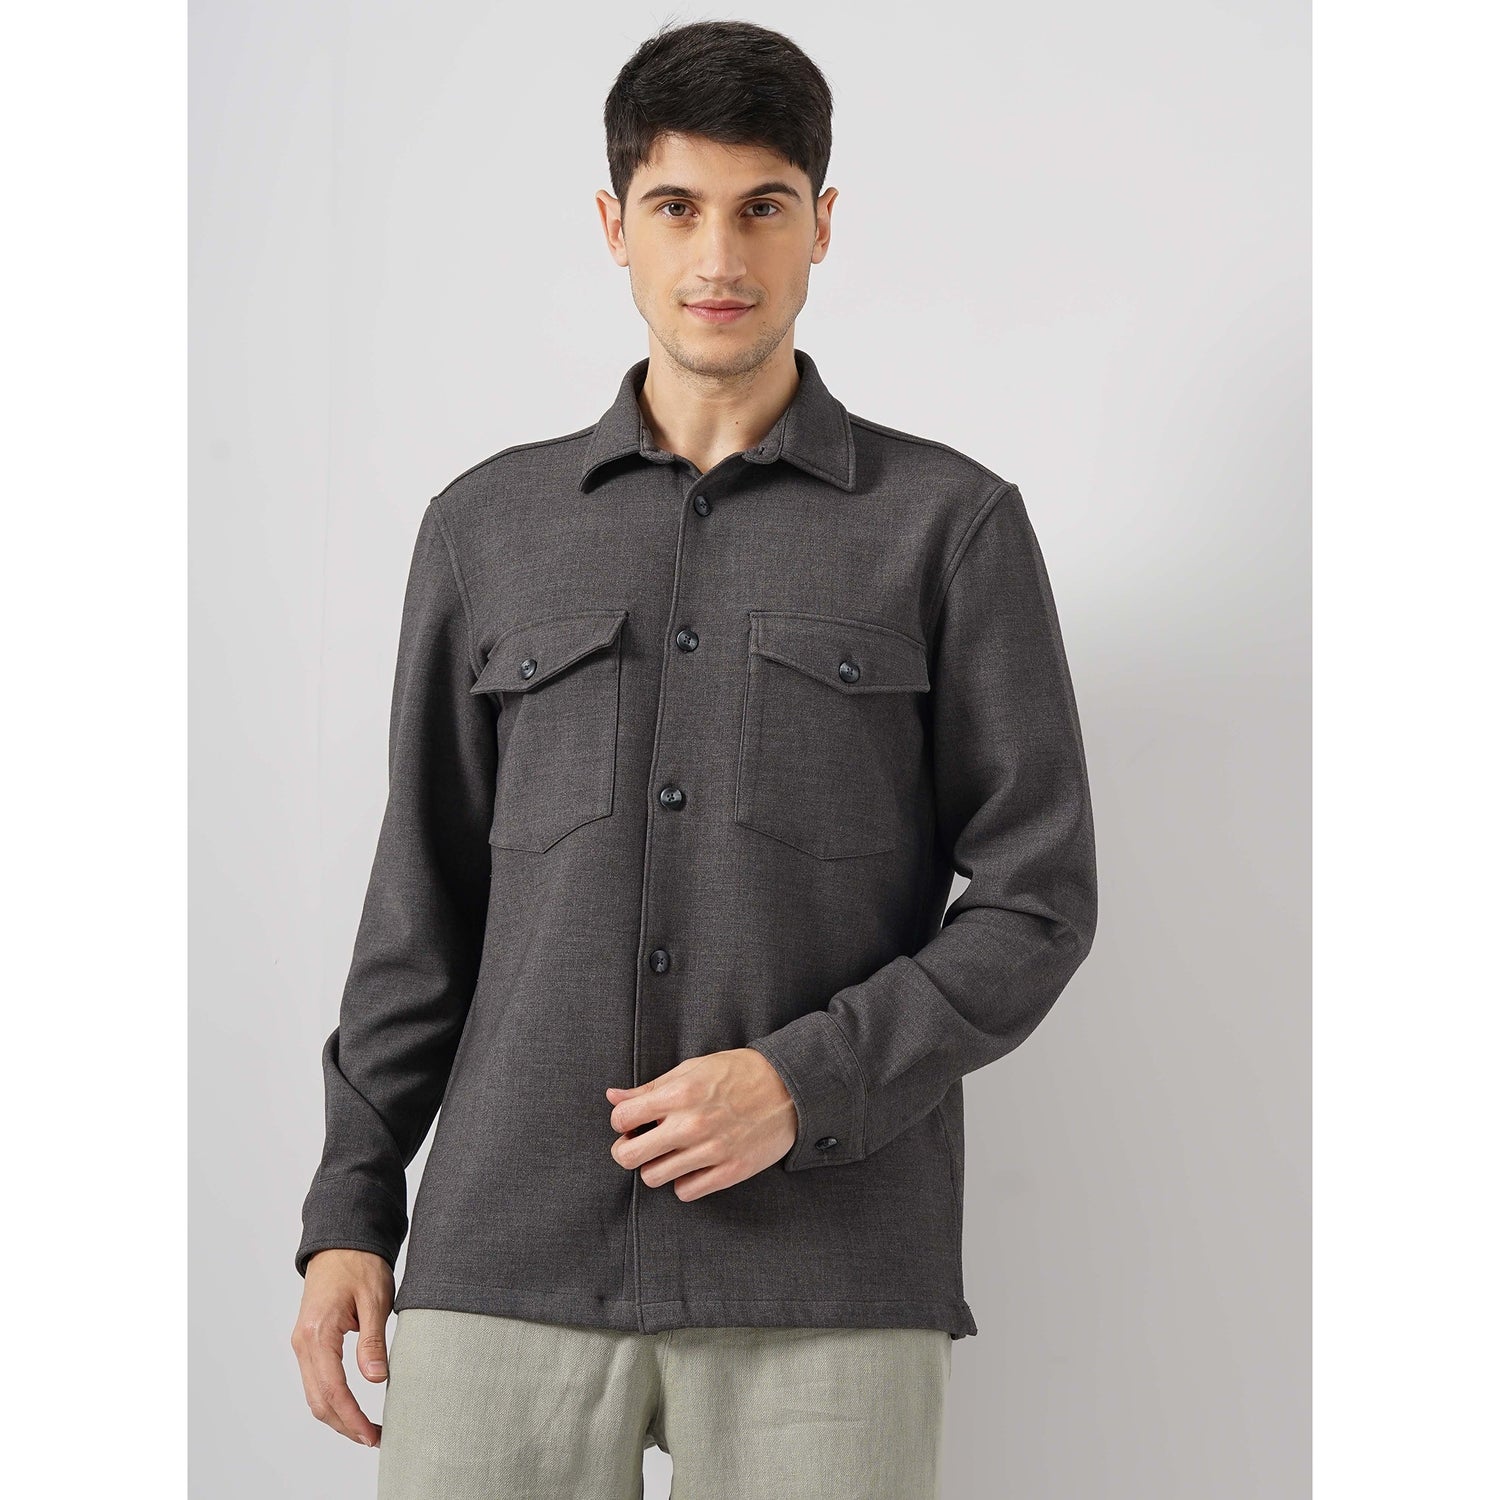 Men Grey Spread Collar Solid Regular Fit Polyester Overshirt Casual Shirt (GASMARTIN)